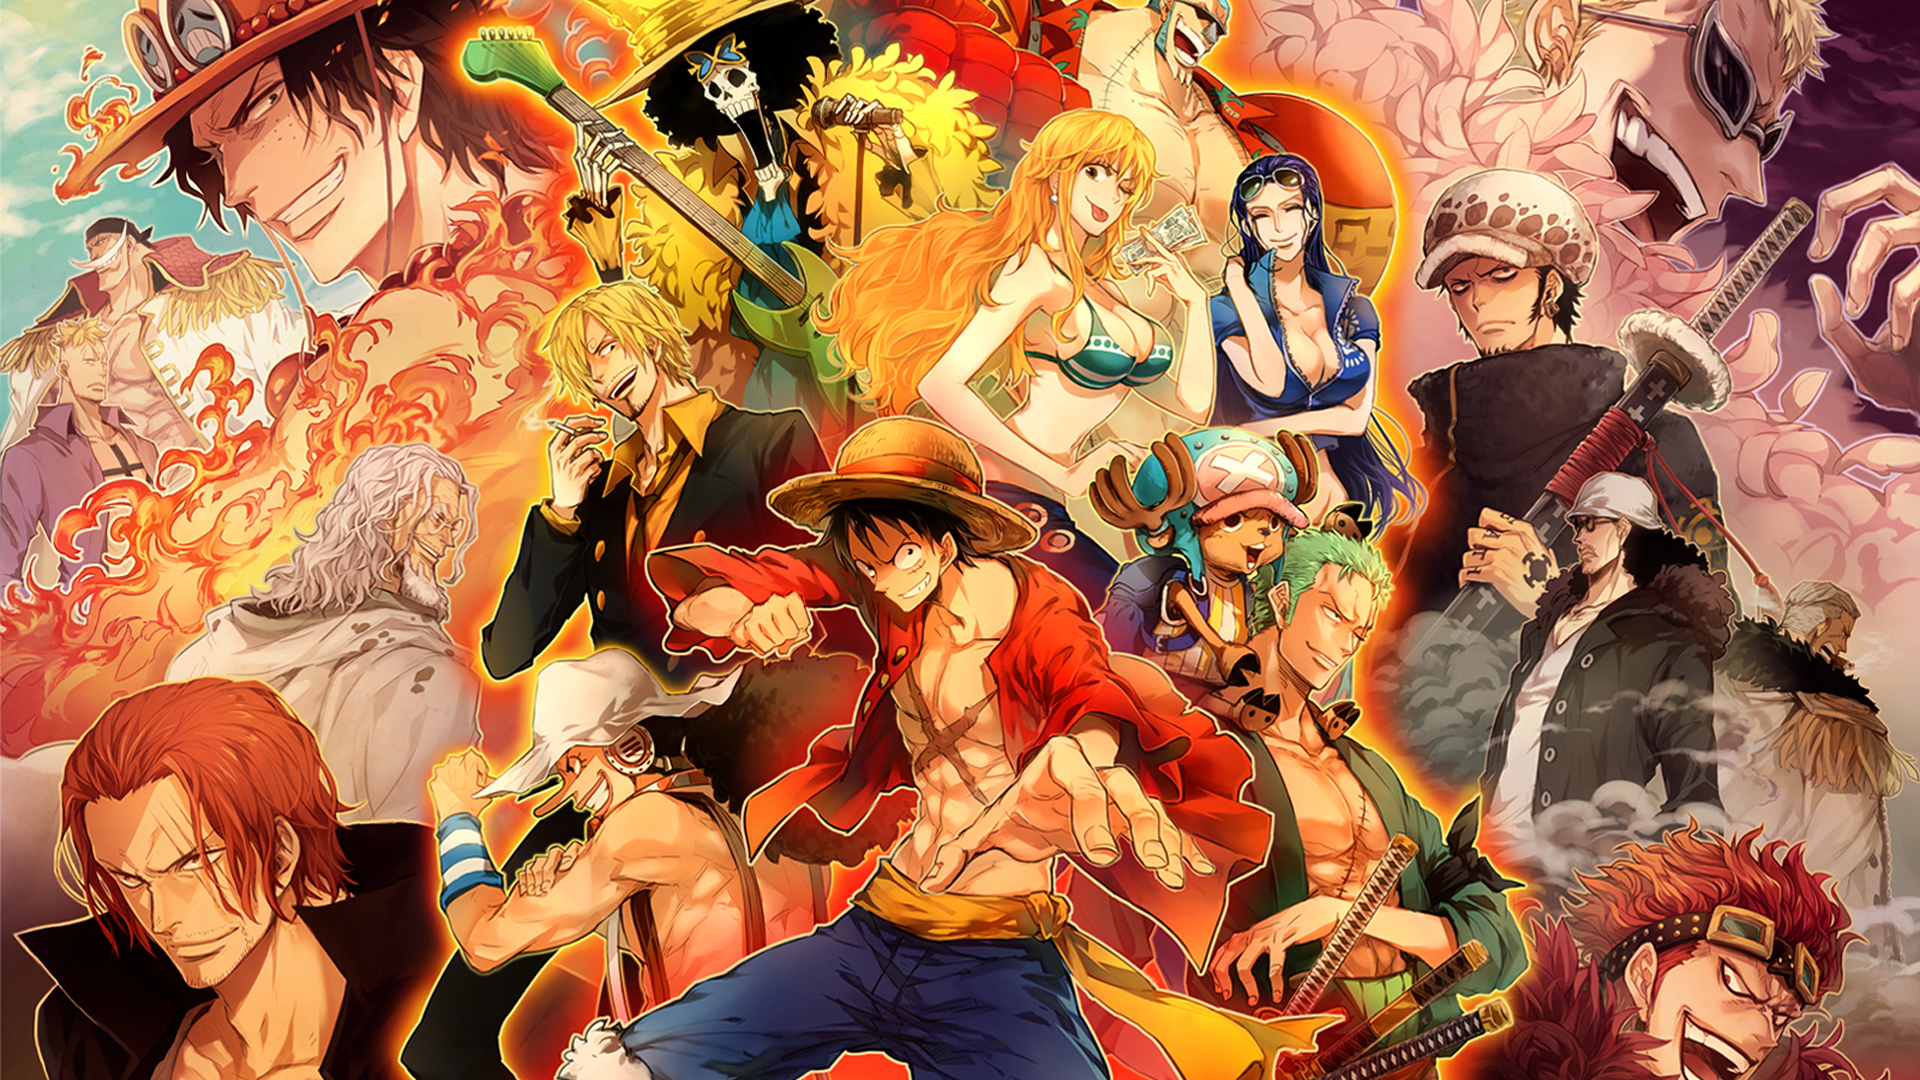 76+] One Piece Wallpaper Hd On Wallpapersafari dedans Dessin Animé De One Piece